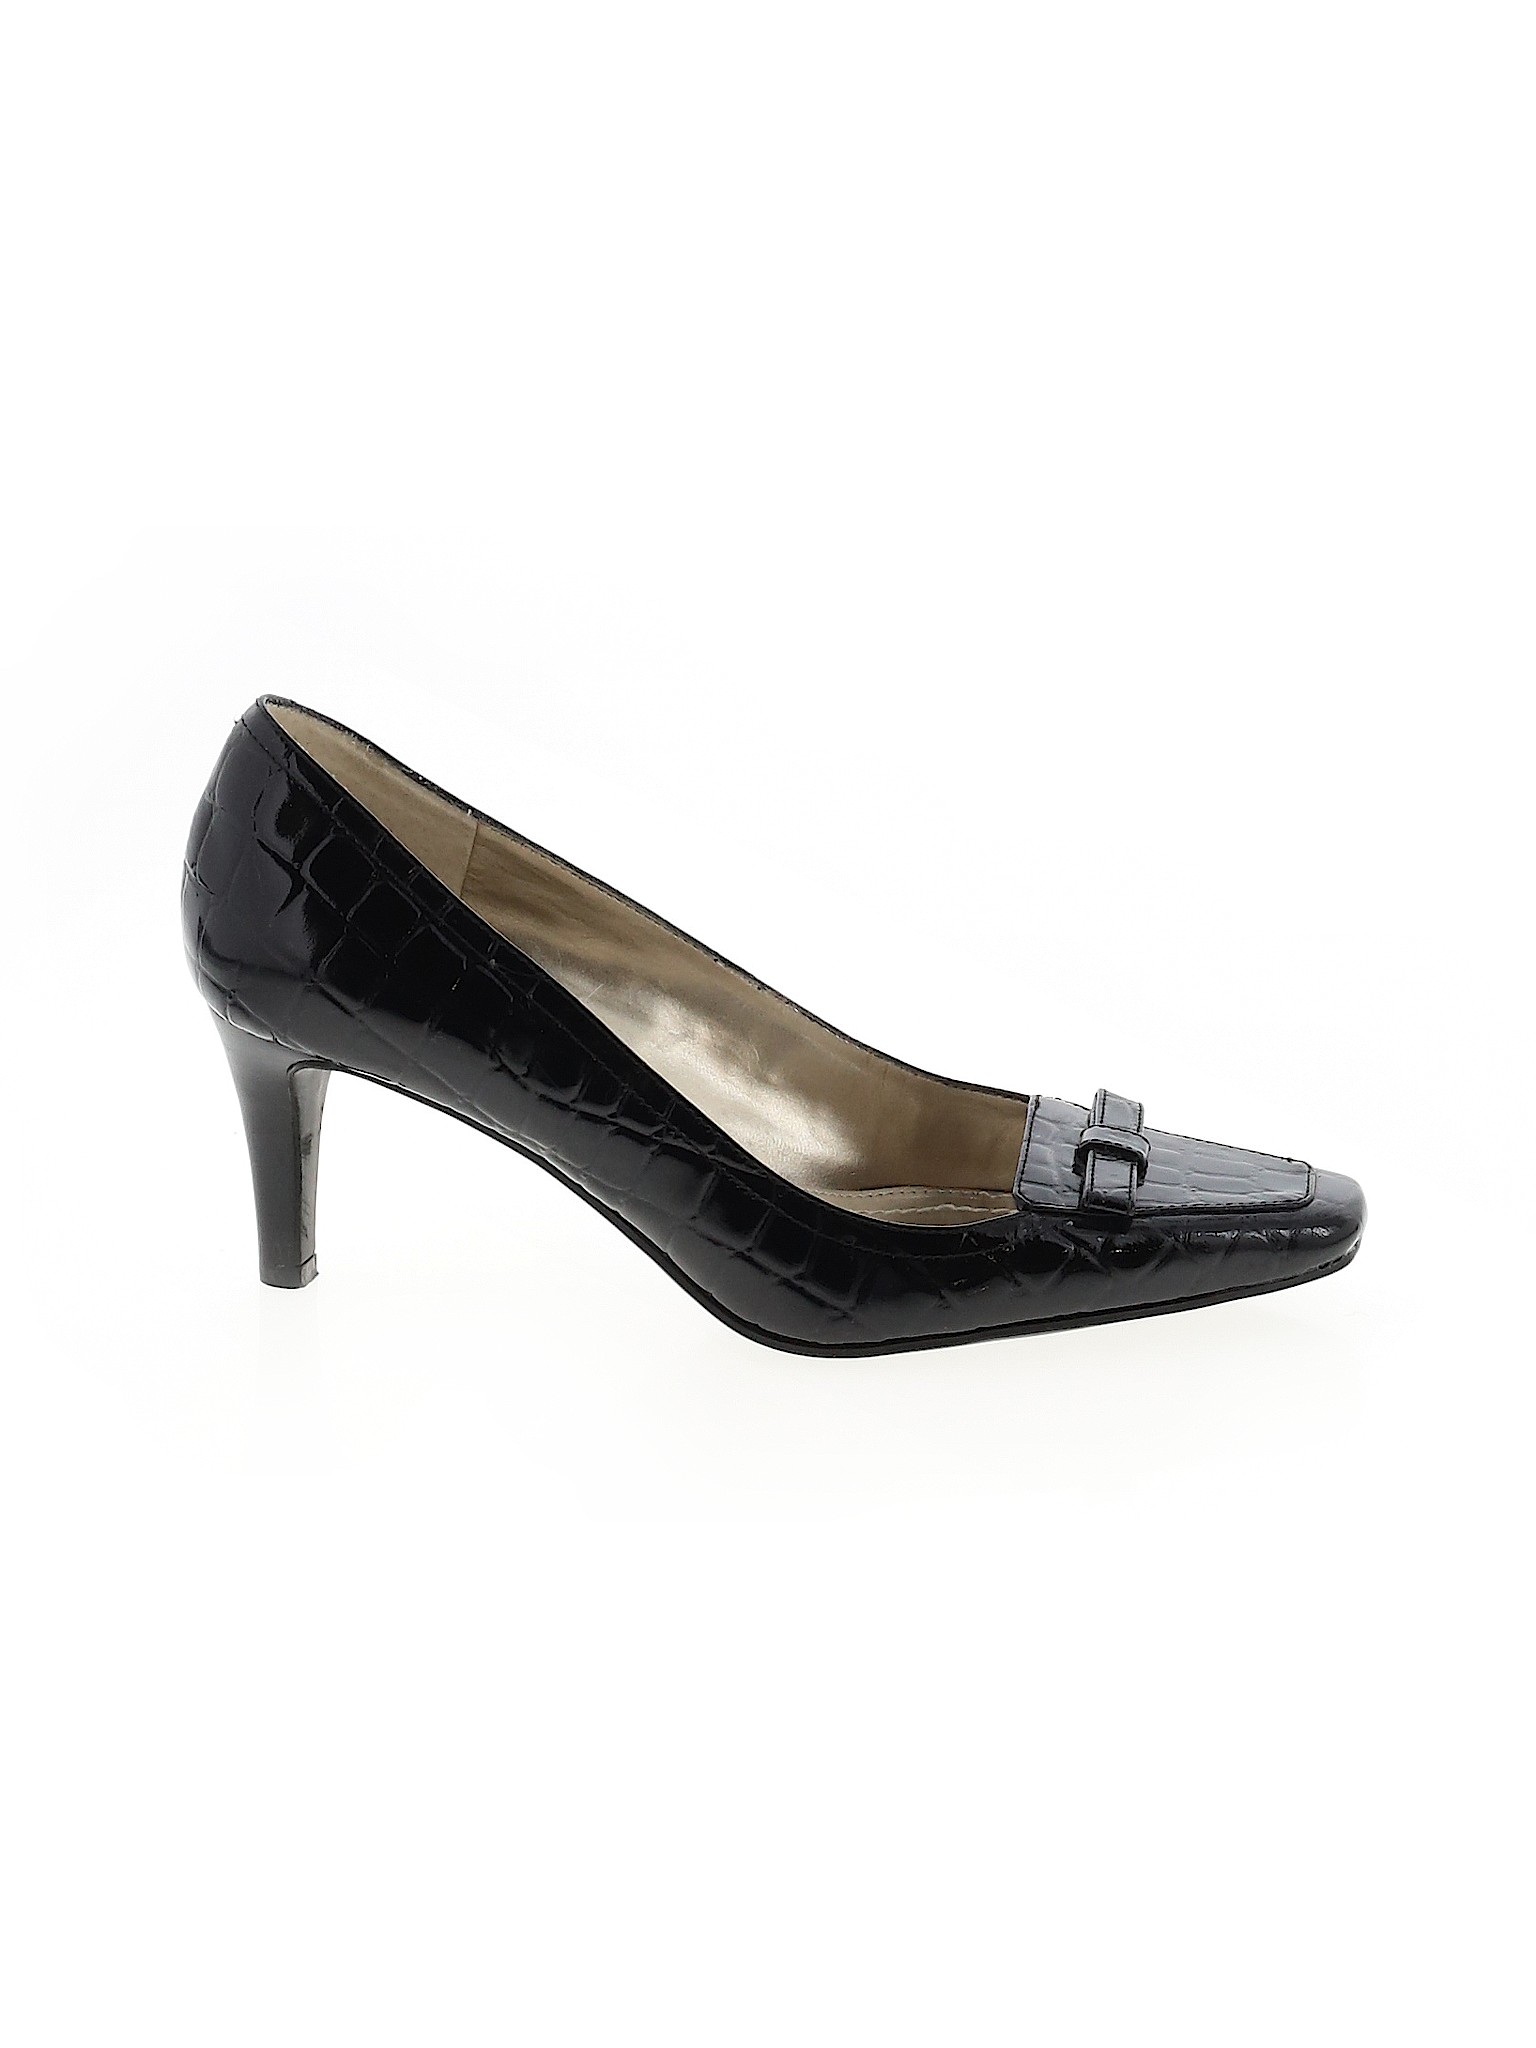 Bandolino Women Black Heels US 6.5 | eBay